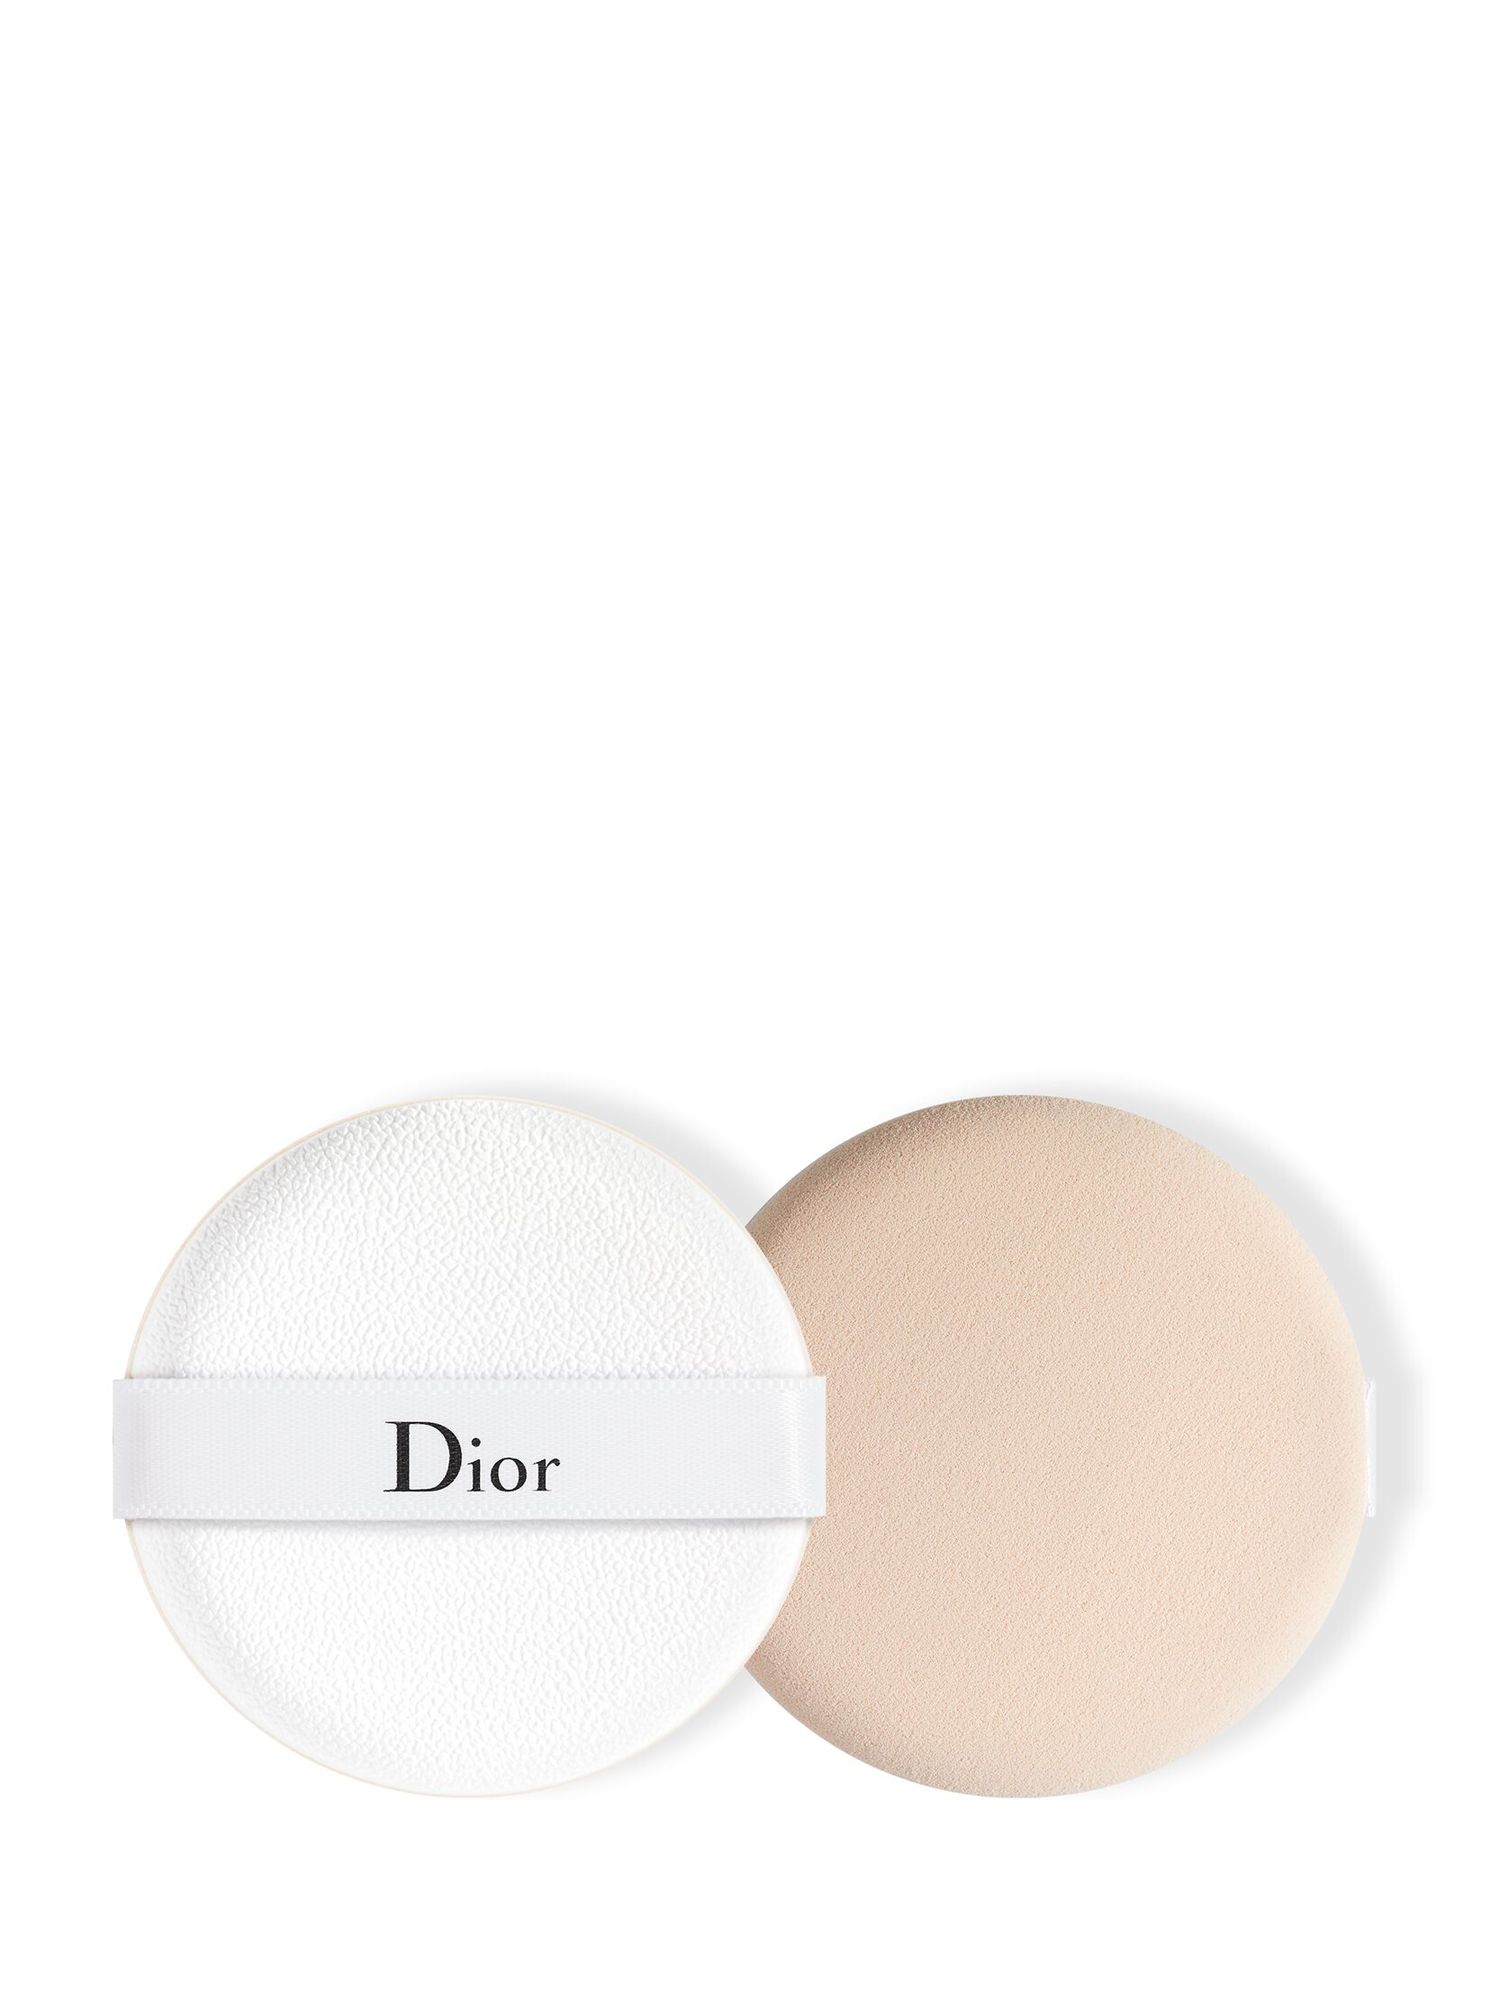 dior makeup sponge, OFF 76%,Cheap price!